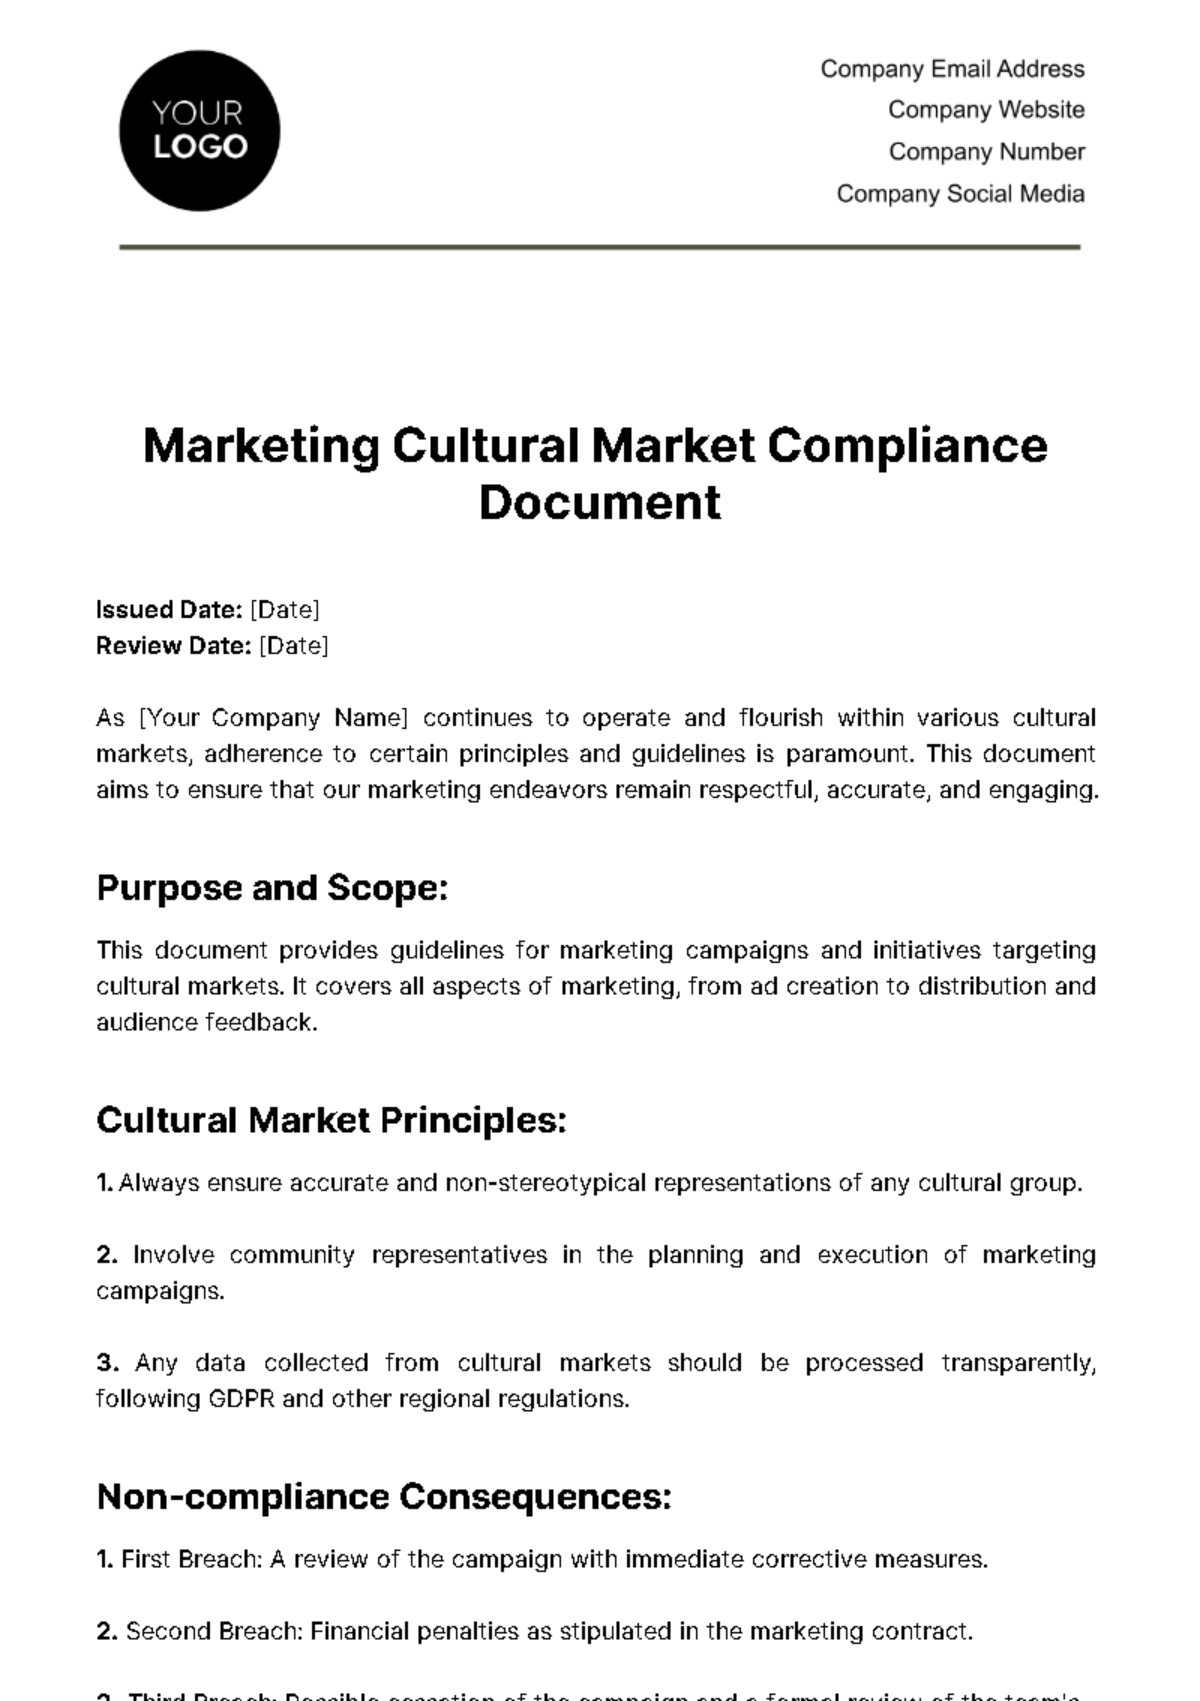 Marketing Cultural Market Compliance Document Template